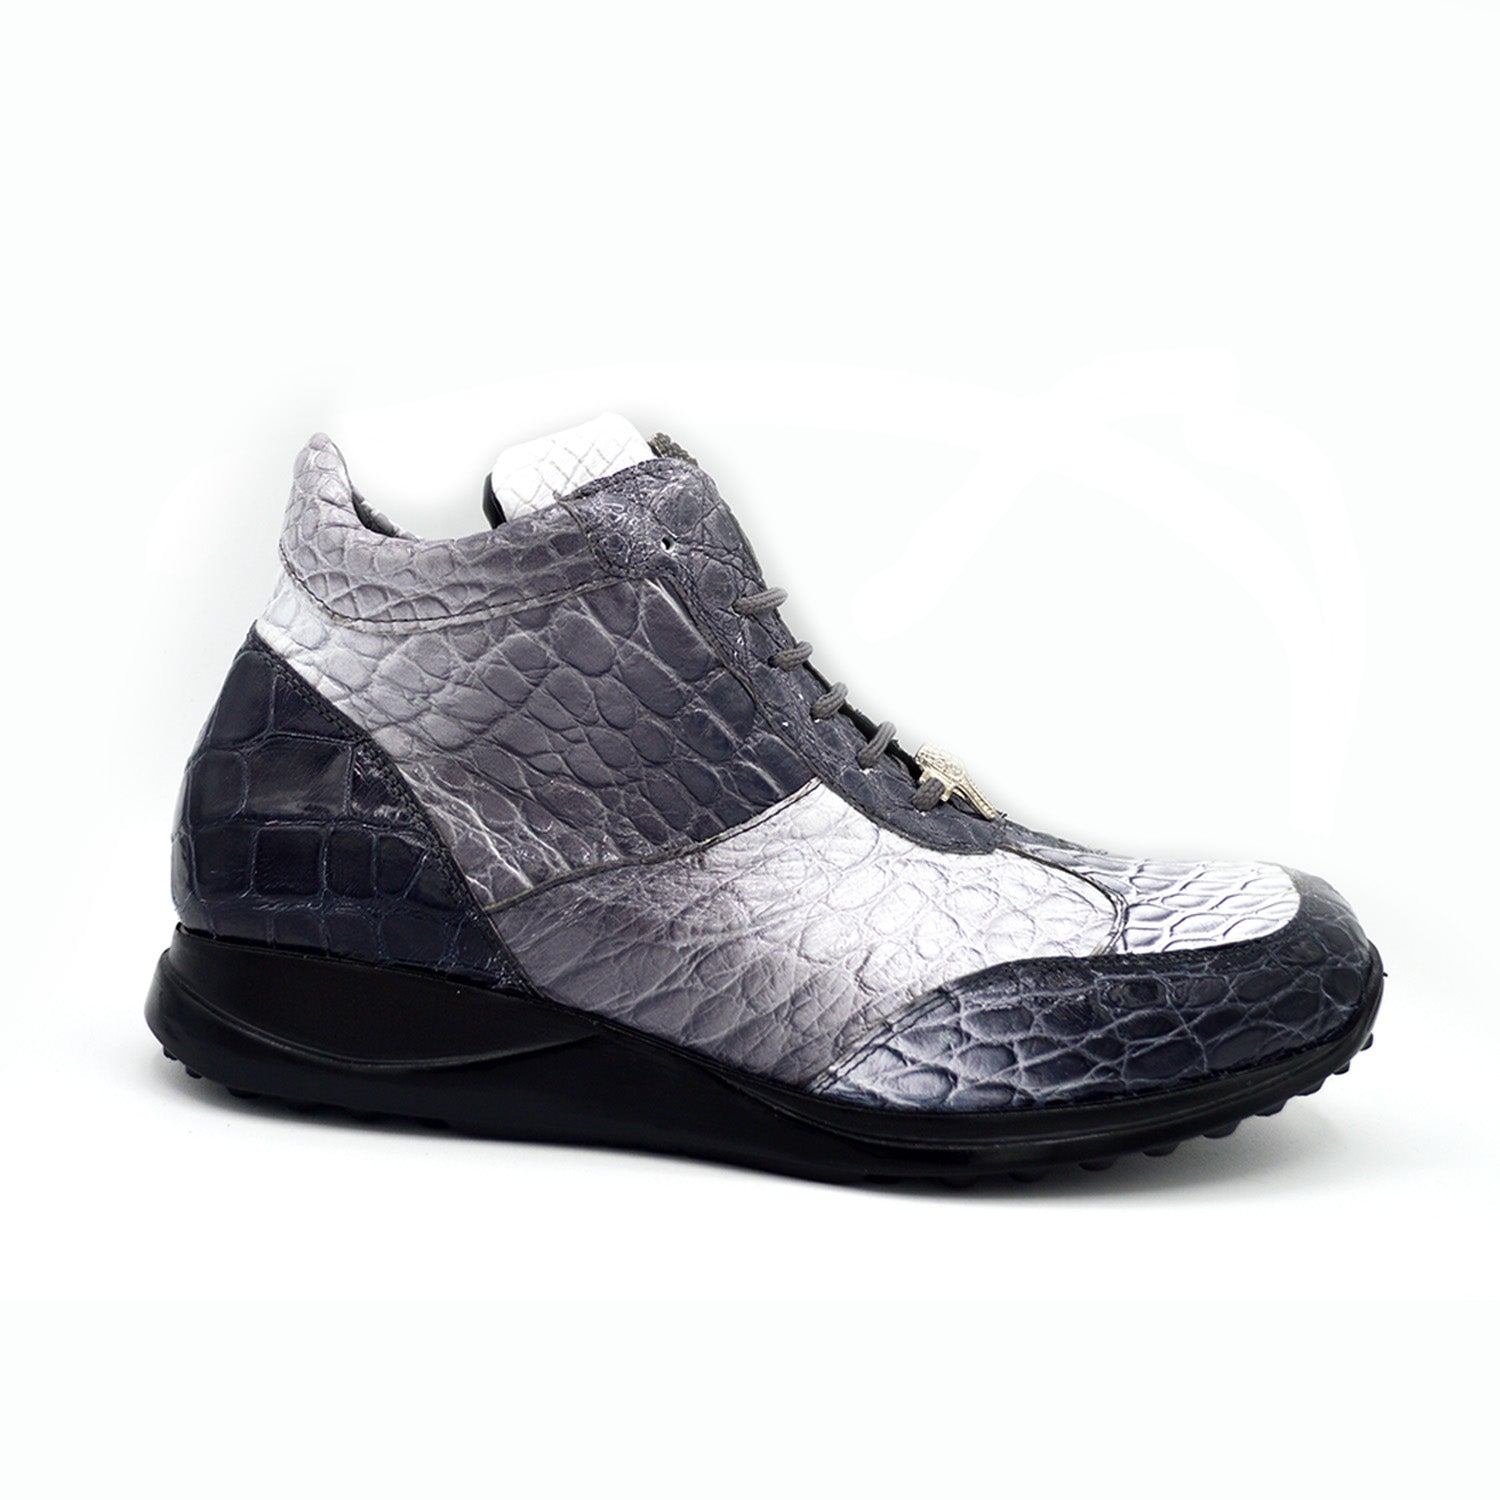 Mauri 8510 FC Multi Color Grey Fade Hi Top Sneaker